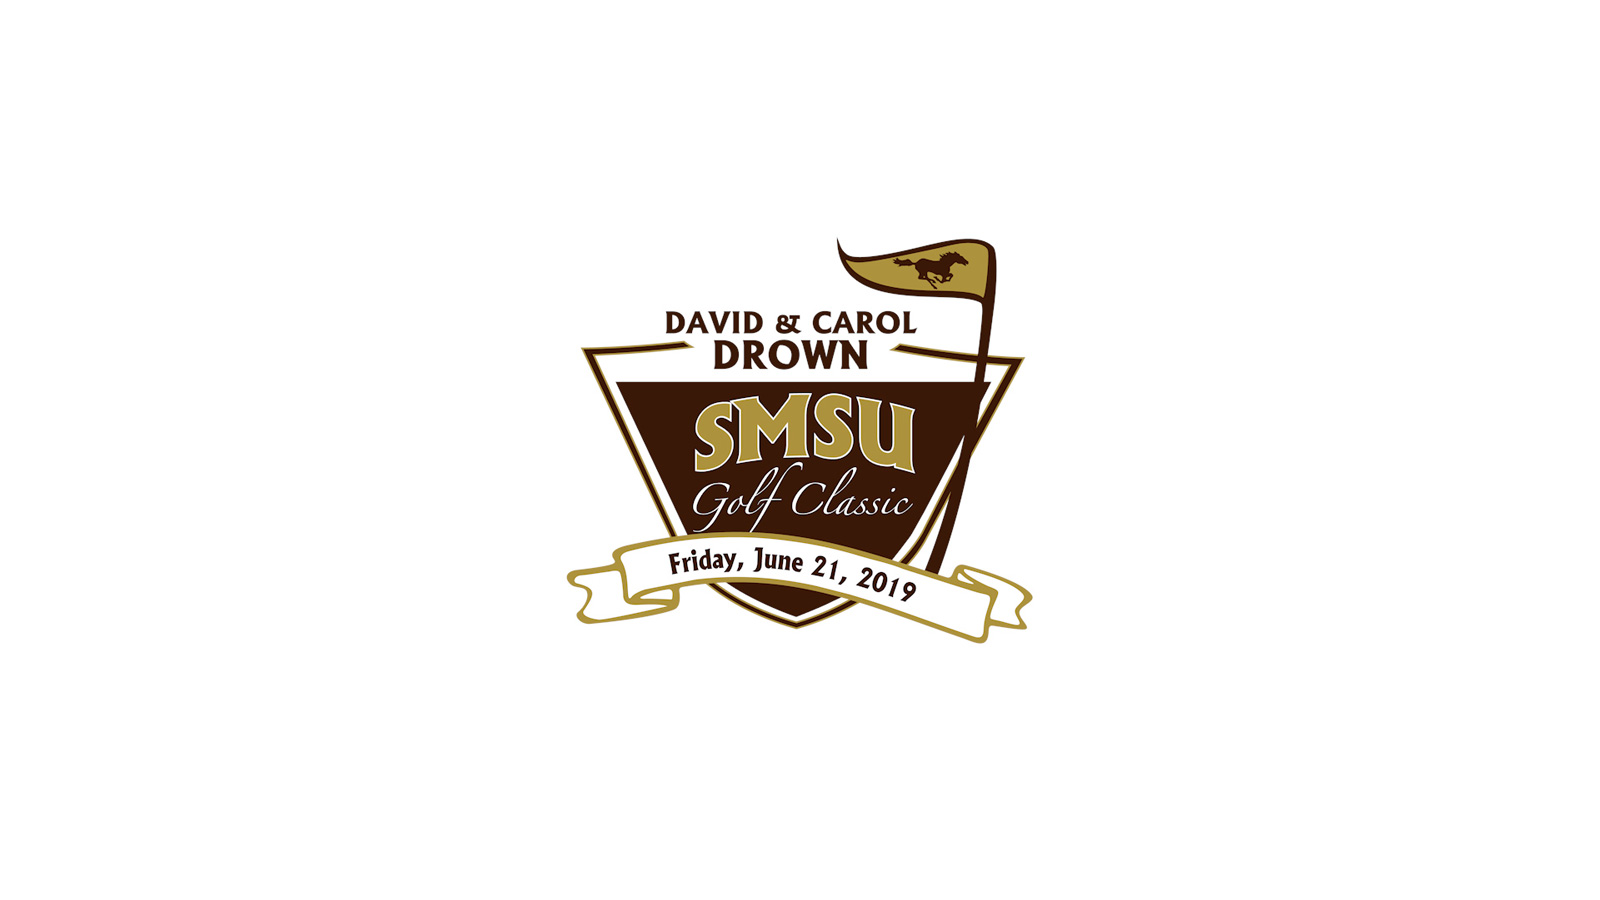 The 34th Annual David & Carol Drown SMSU Golf Classic